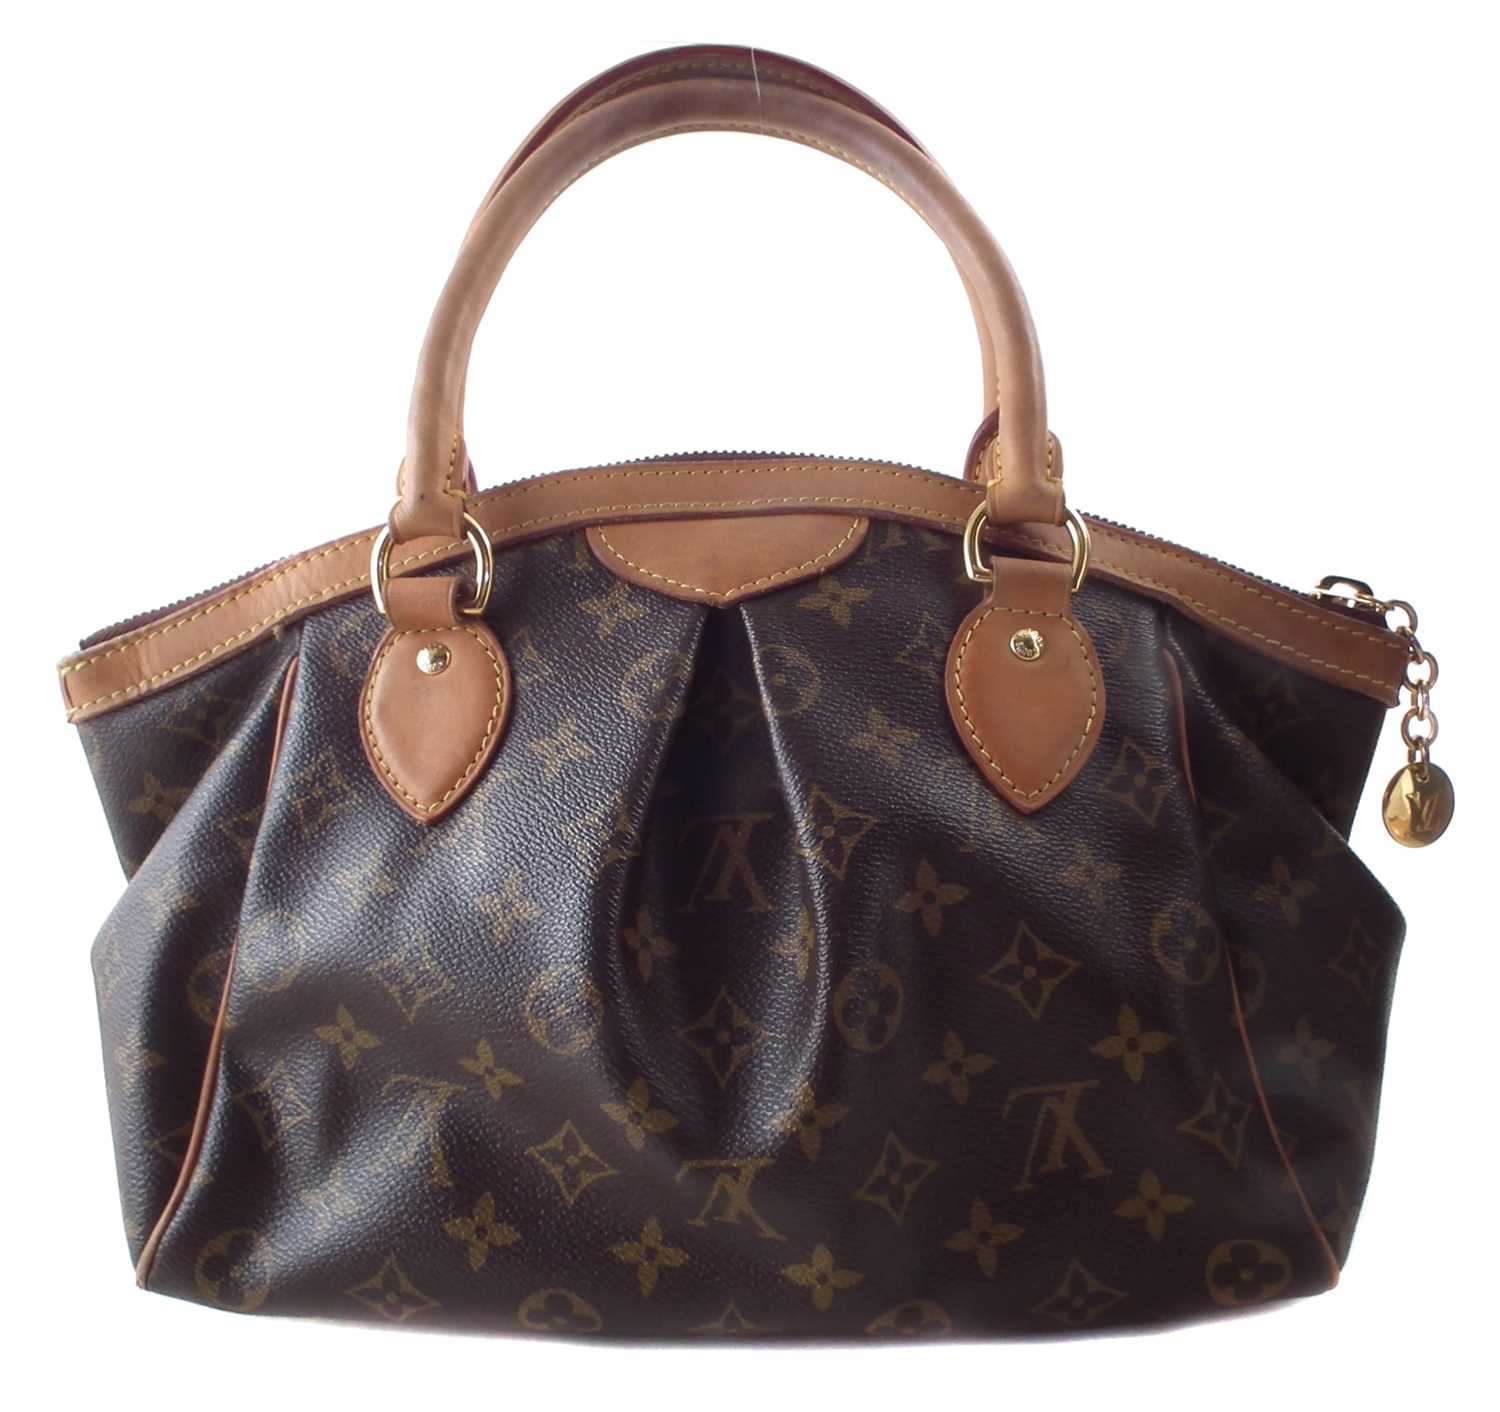 A Louis Vuitton Monogram Tivoli PM handbag,